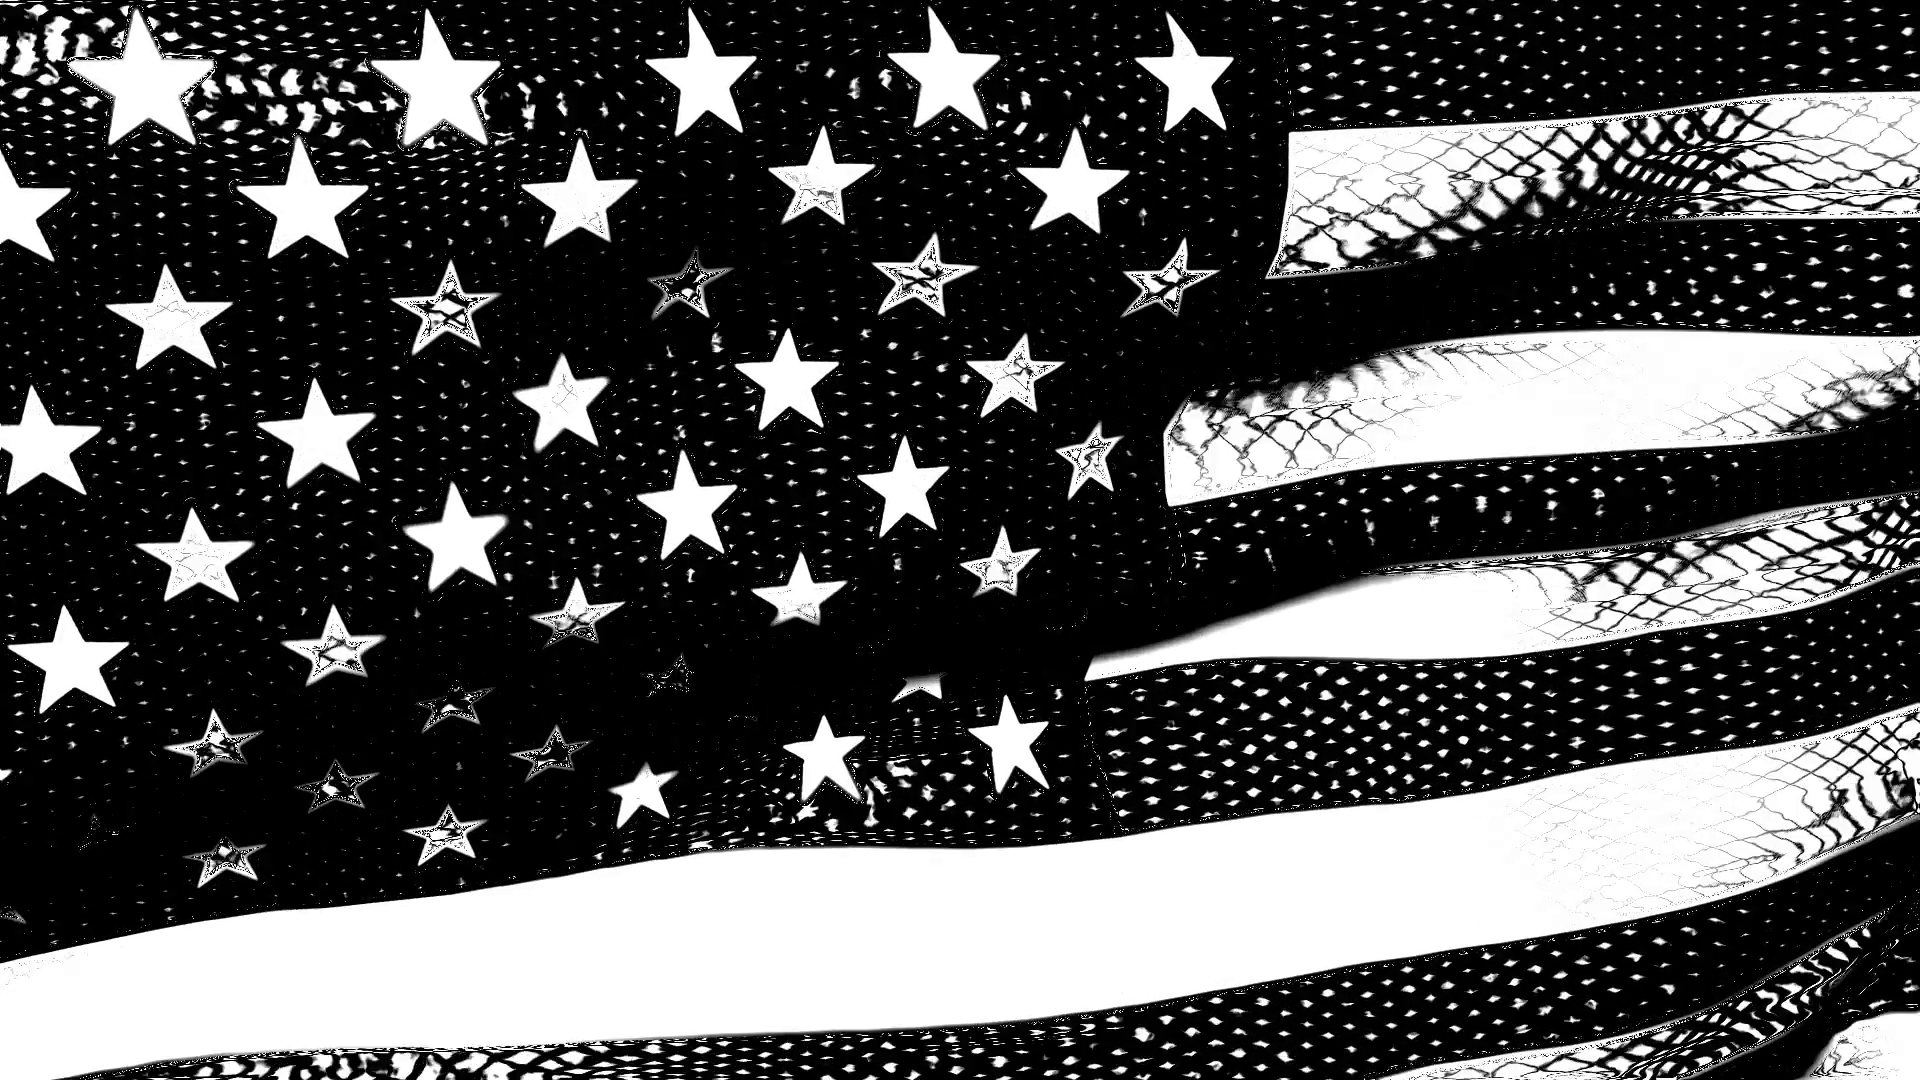 American Flag Black And White Wallpaper